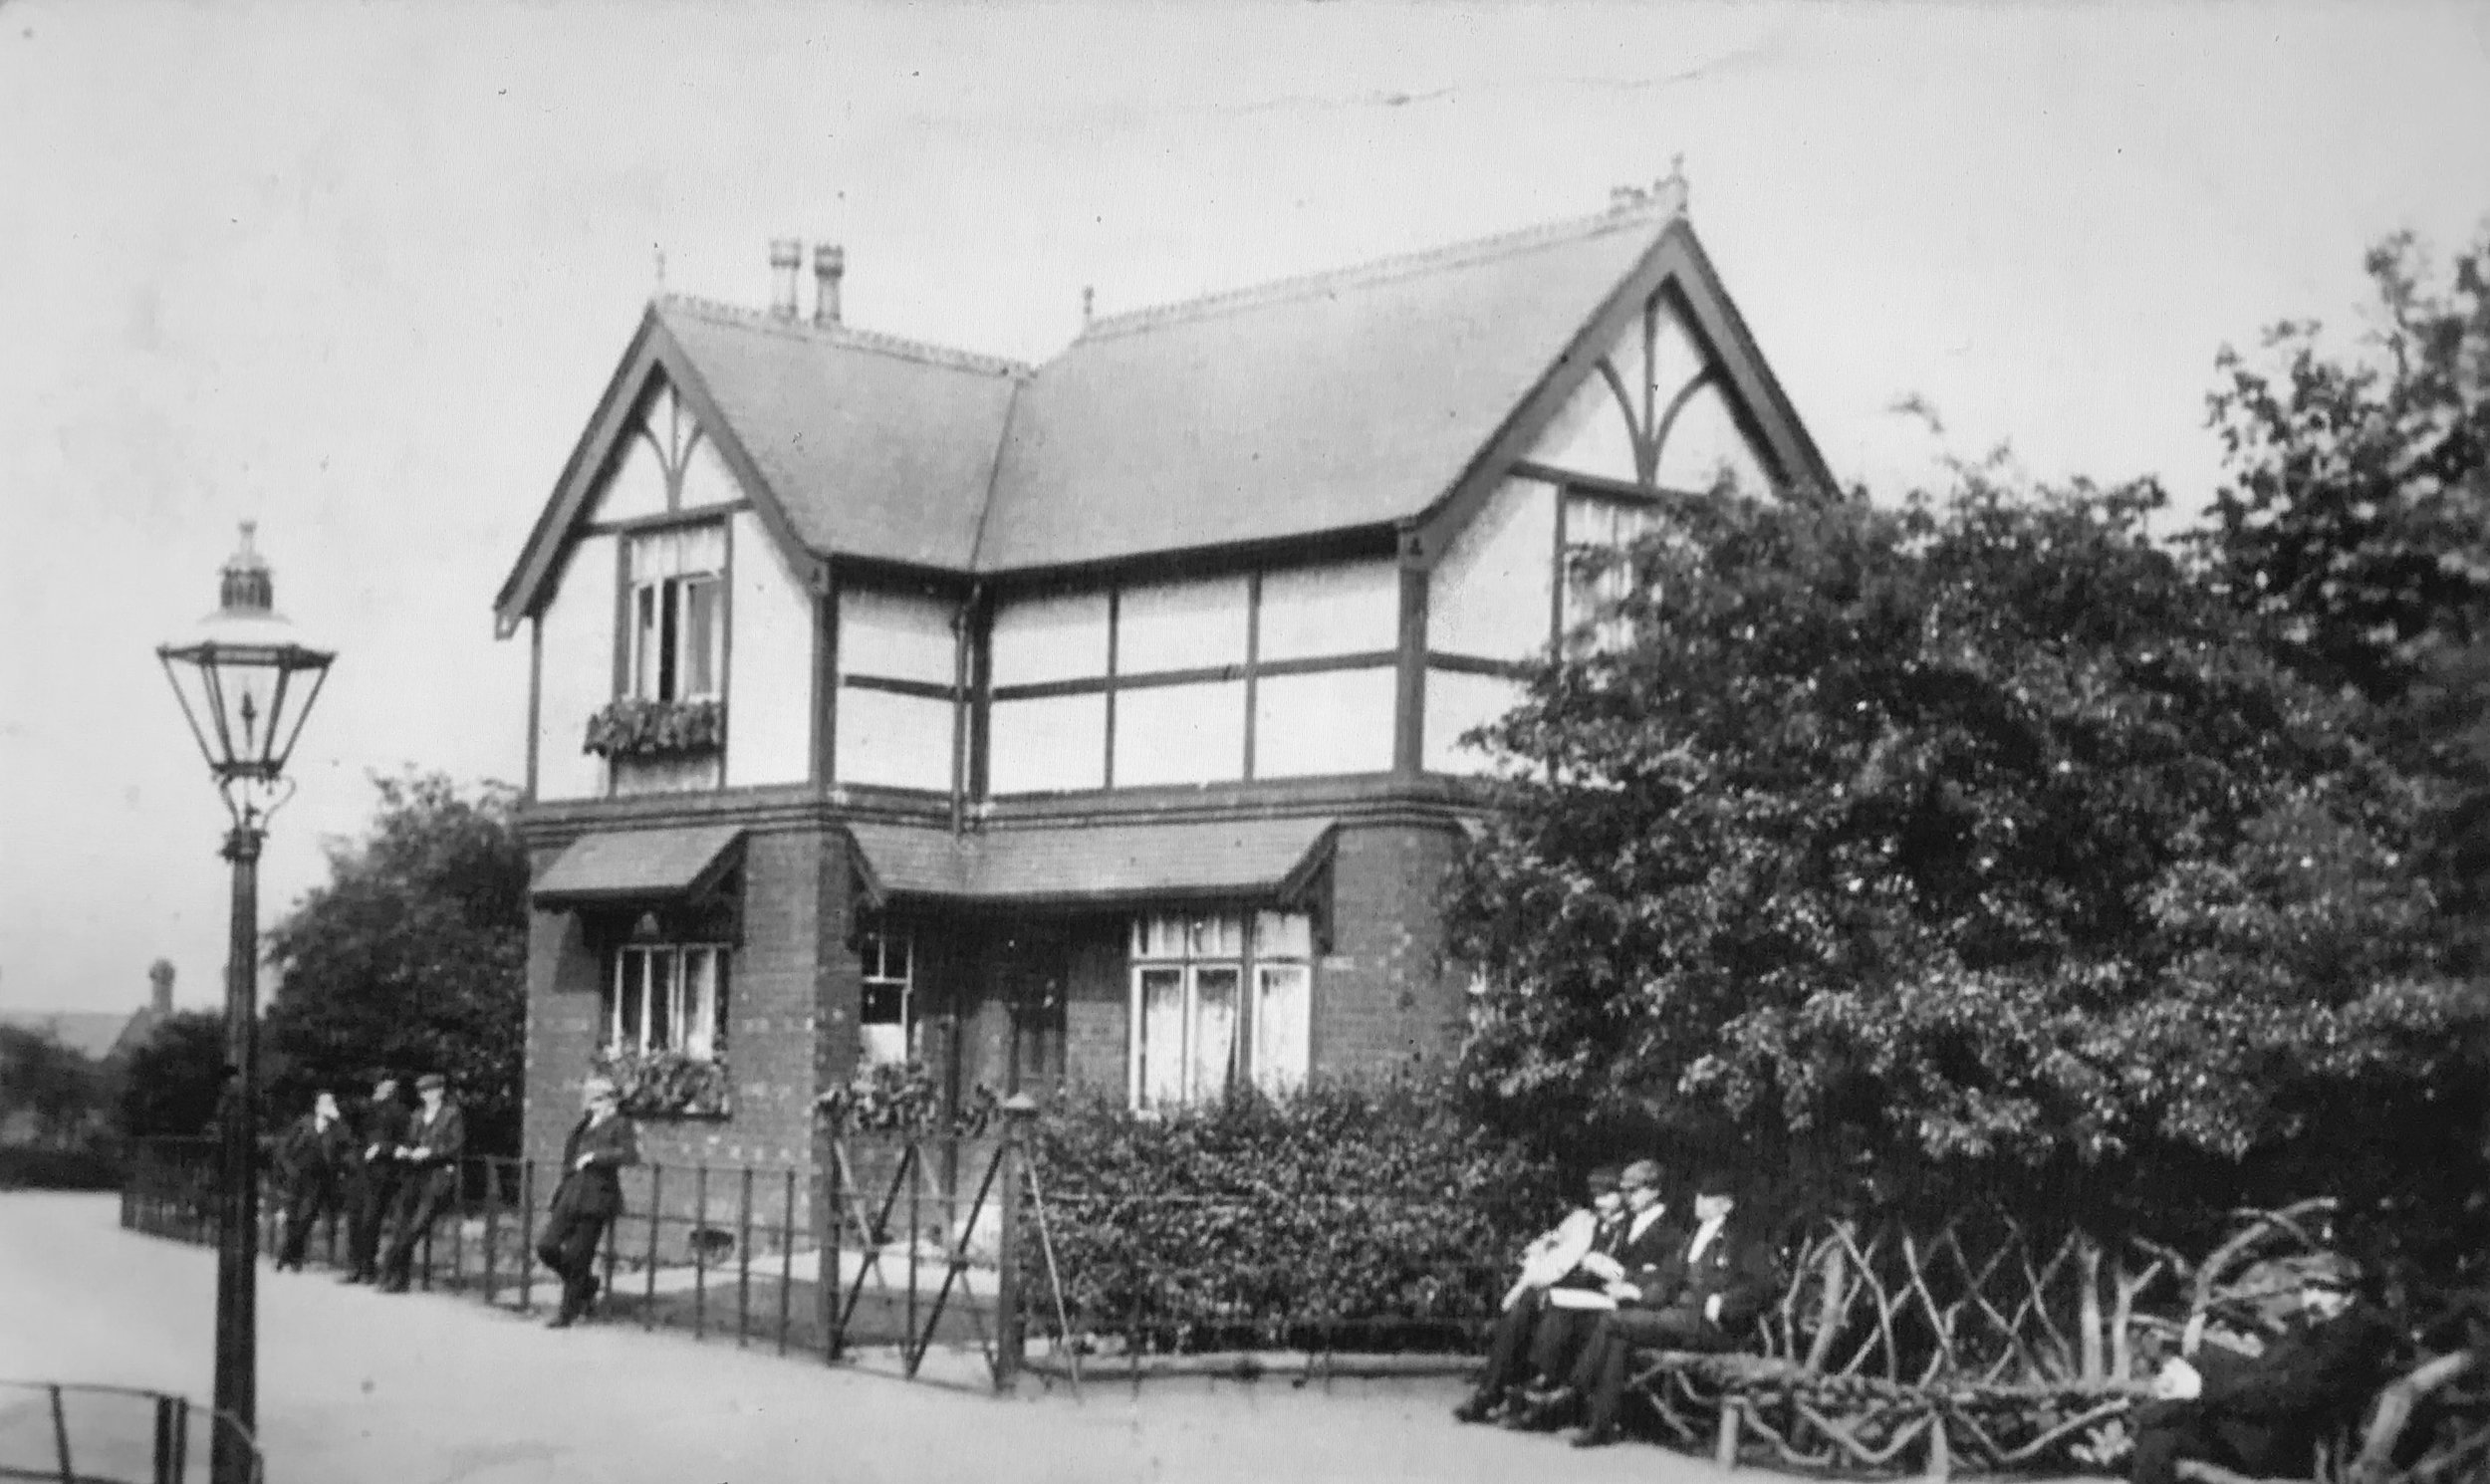 Gardener’s Lodge, Woodhouse Moor, 1911